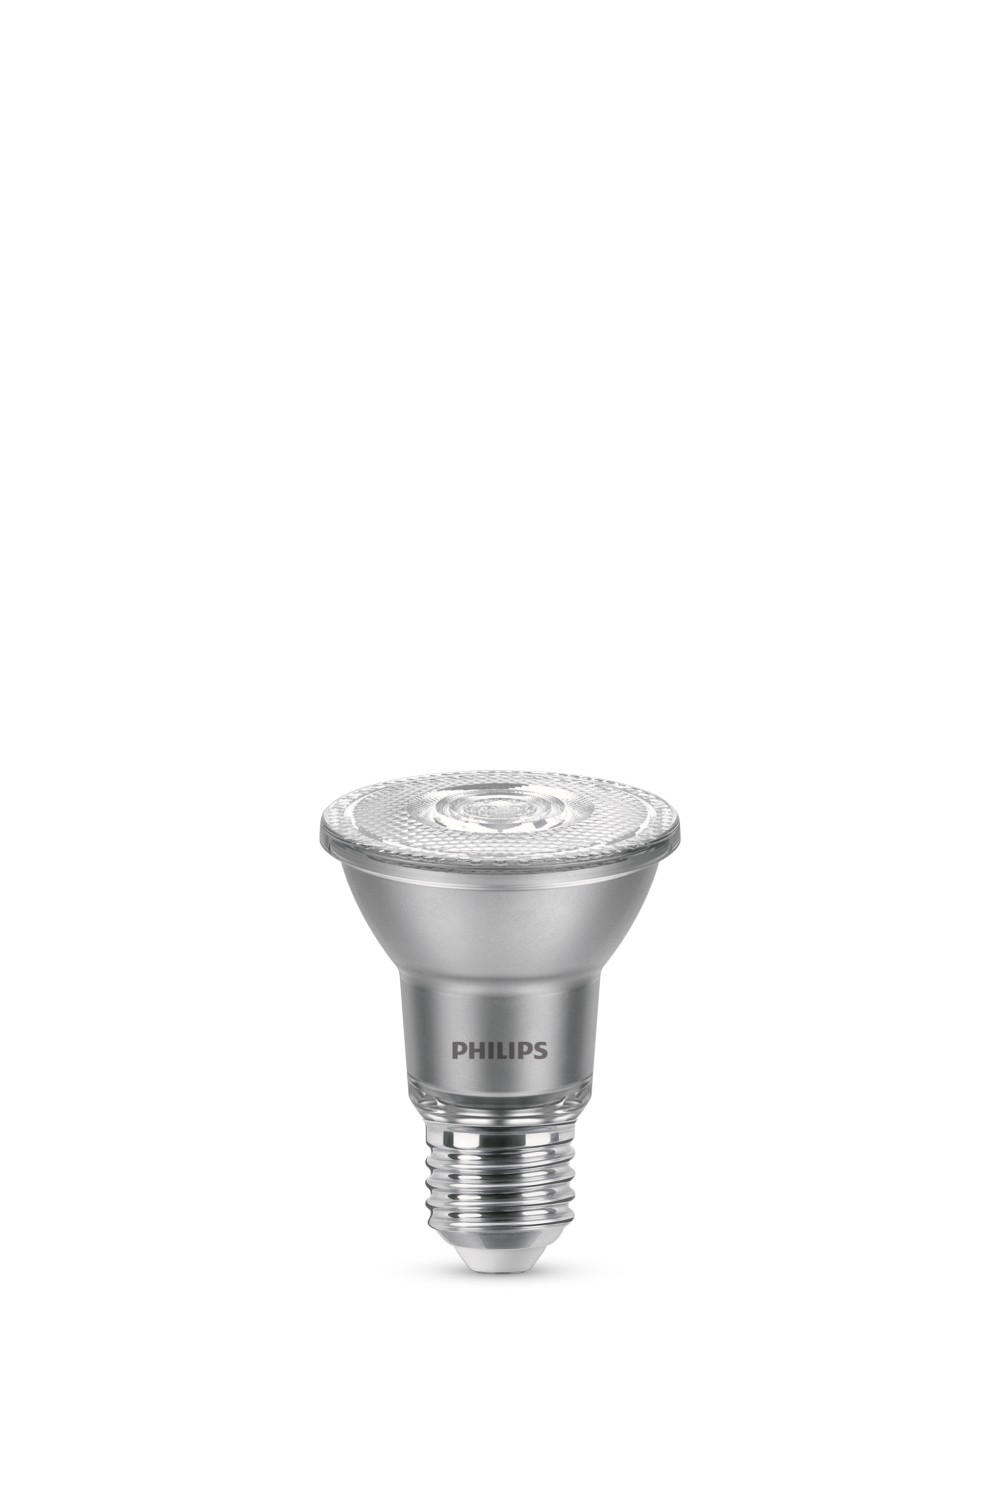 Philips LEDspot Reflektorlampe E27 VLE D 6 Watt 940 PAR20 40 Grad